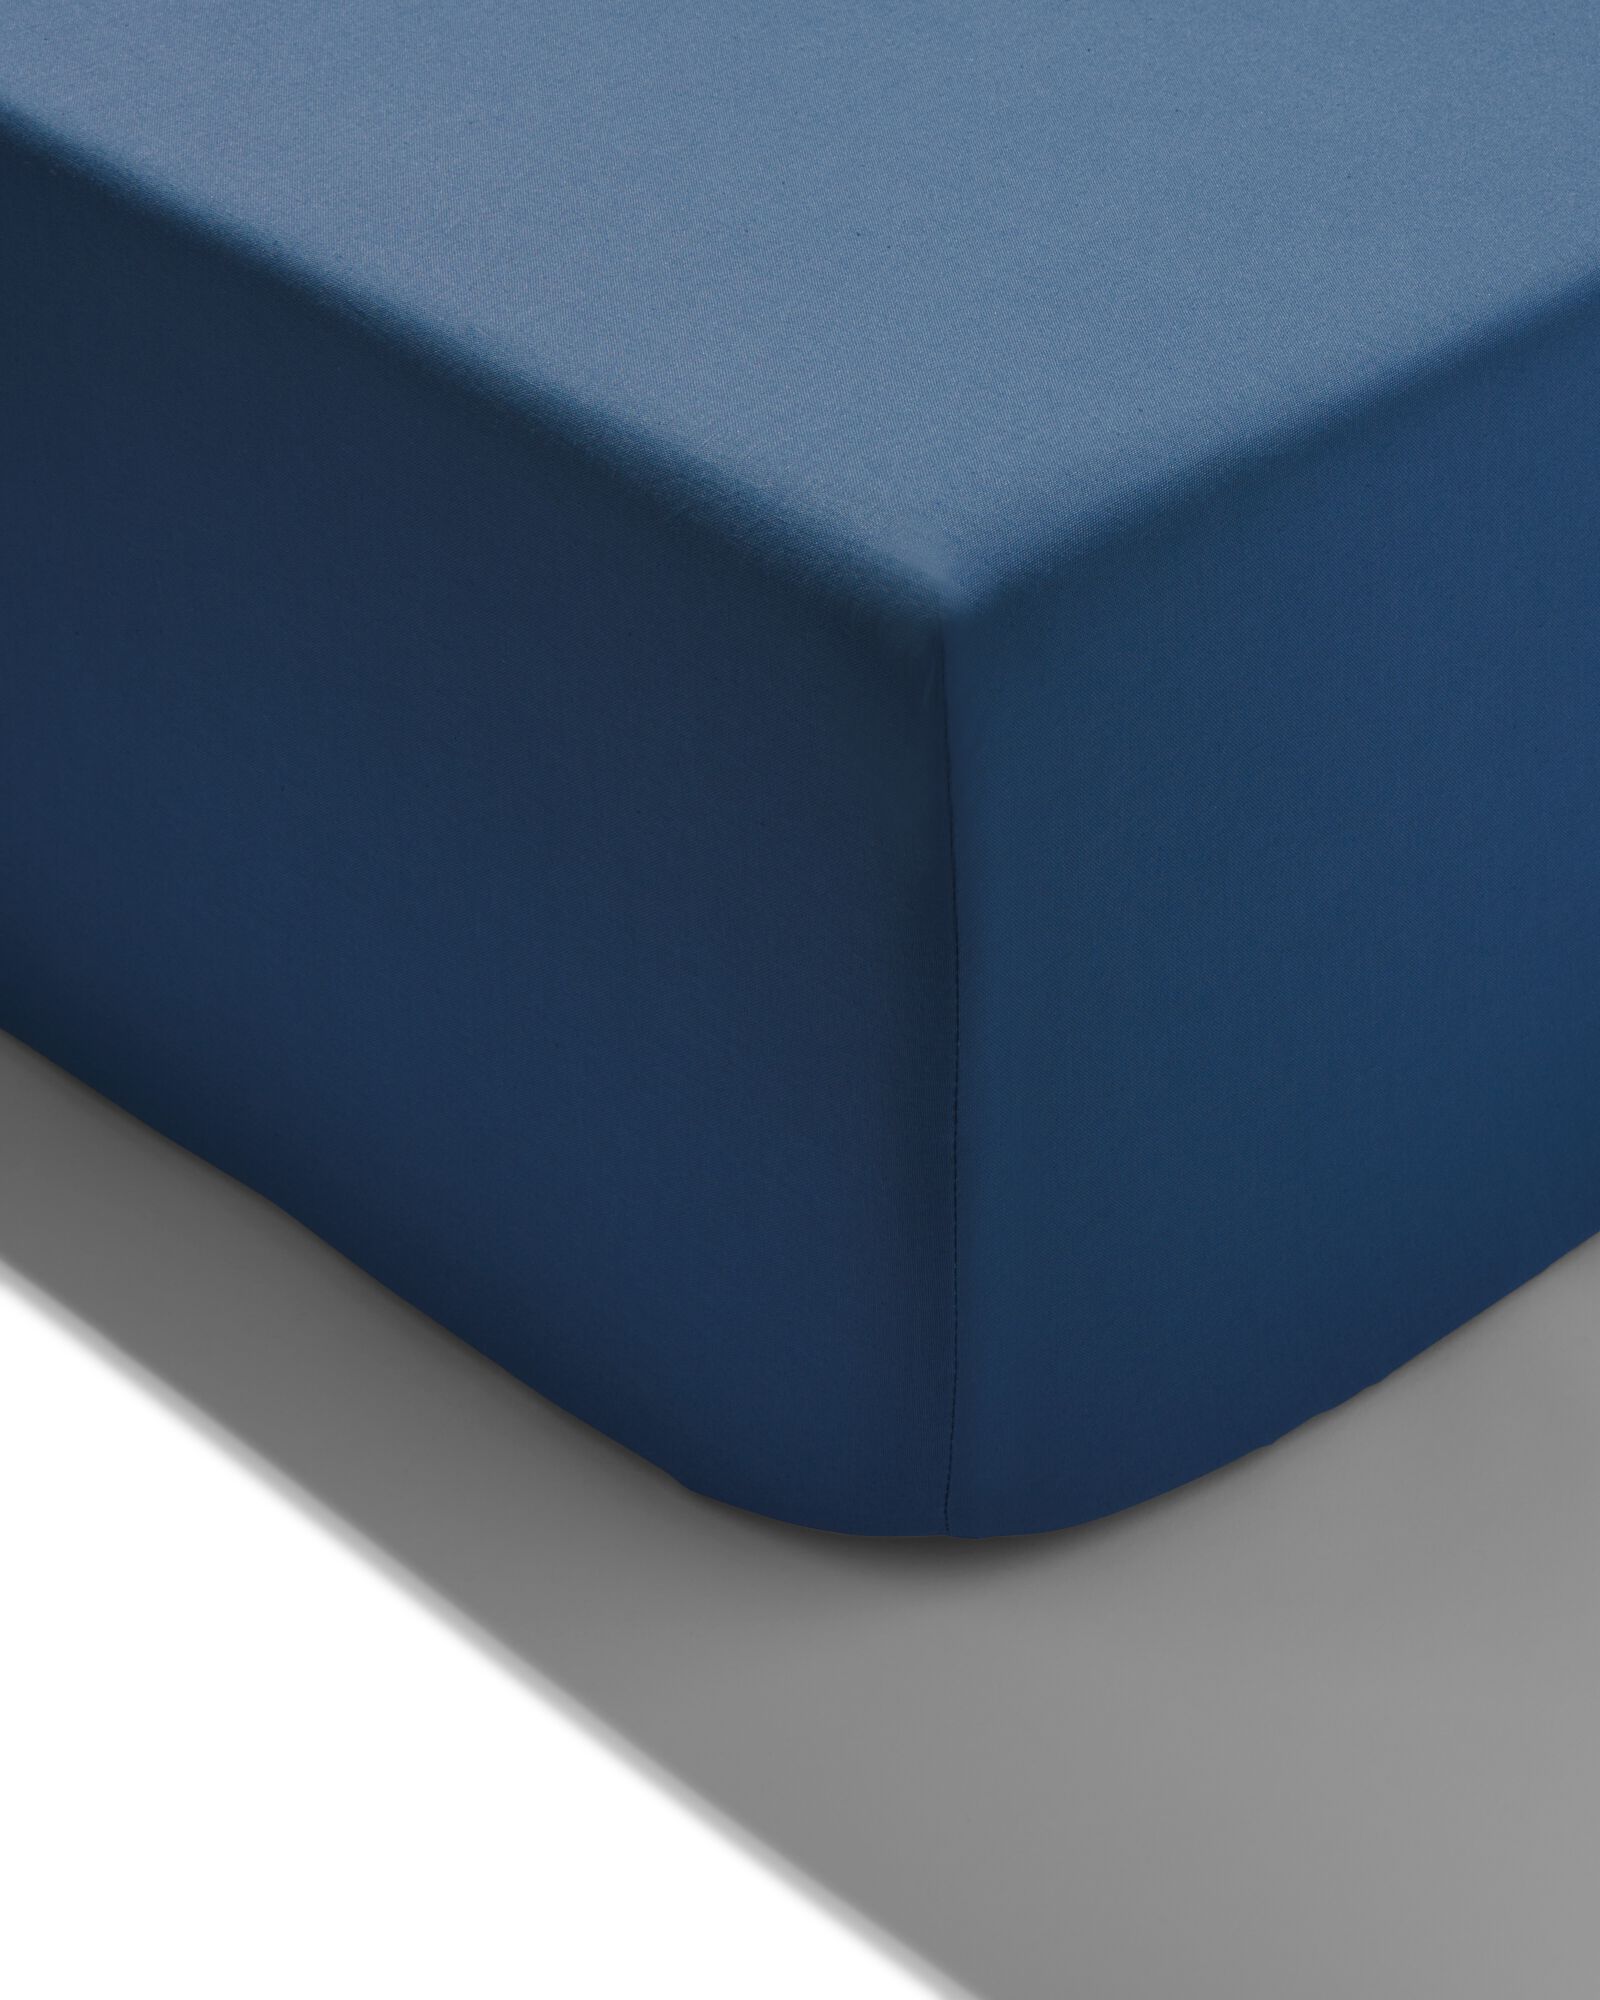 drap-housse coton doux 180x220 bleu - 5190055 - HEMA